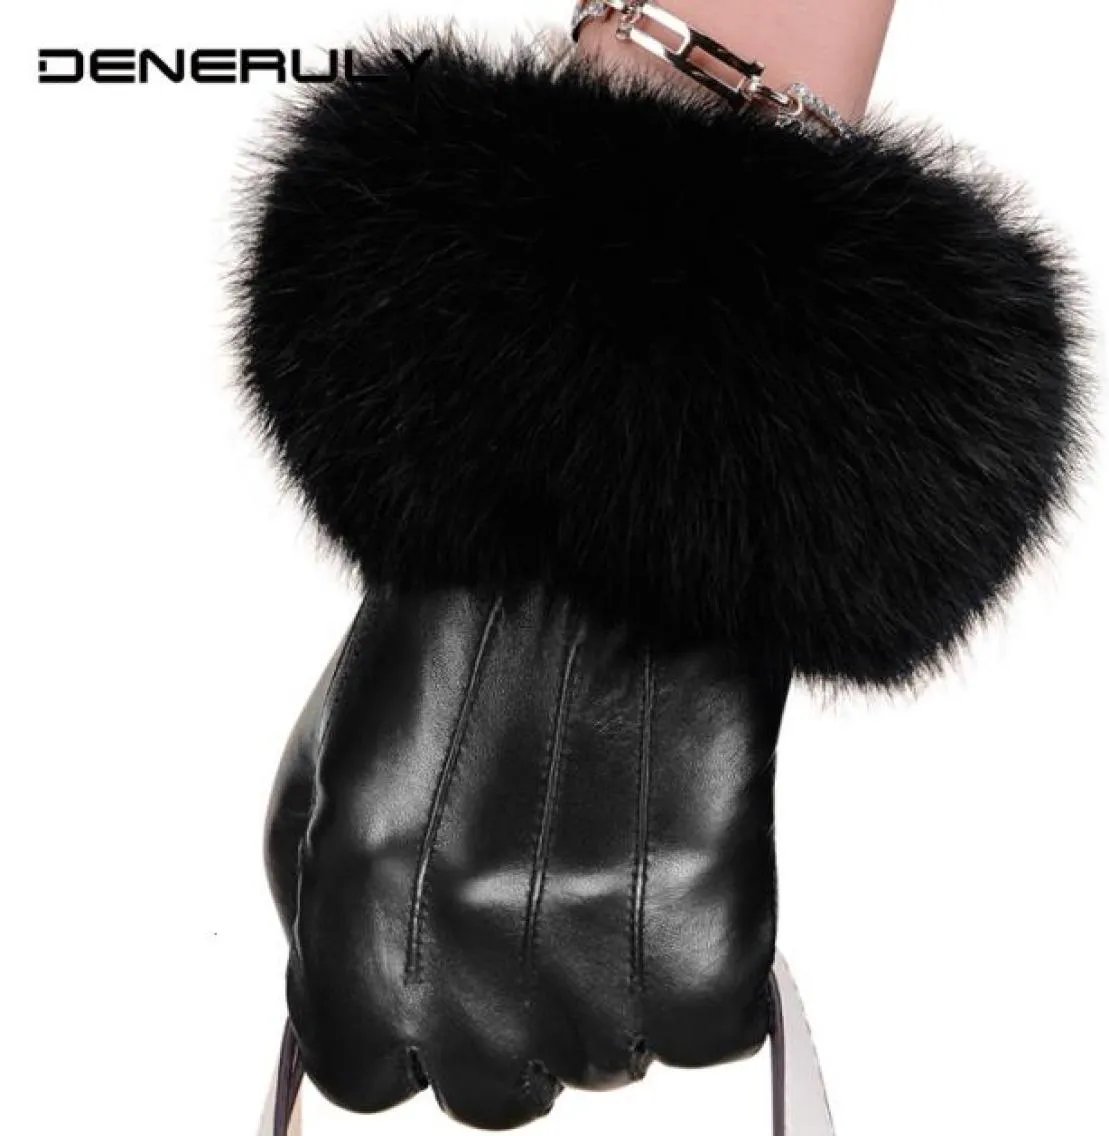 Cinq doigts Gants Winter Femmes 2021 Tactile Scred Geatine Leather Black Luva Guantes Handschoenen Modis Hiver Femme2196149